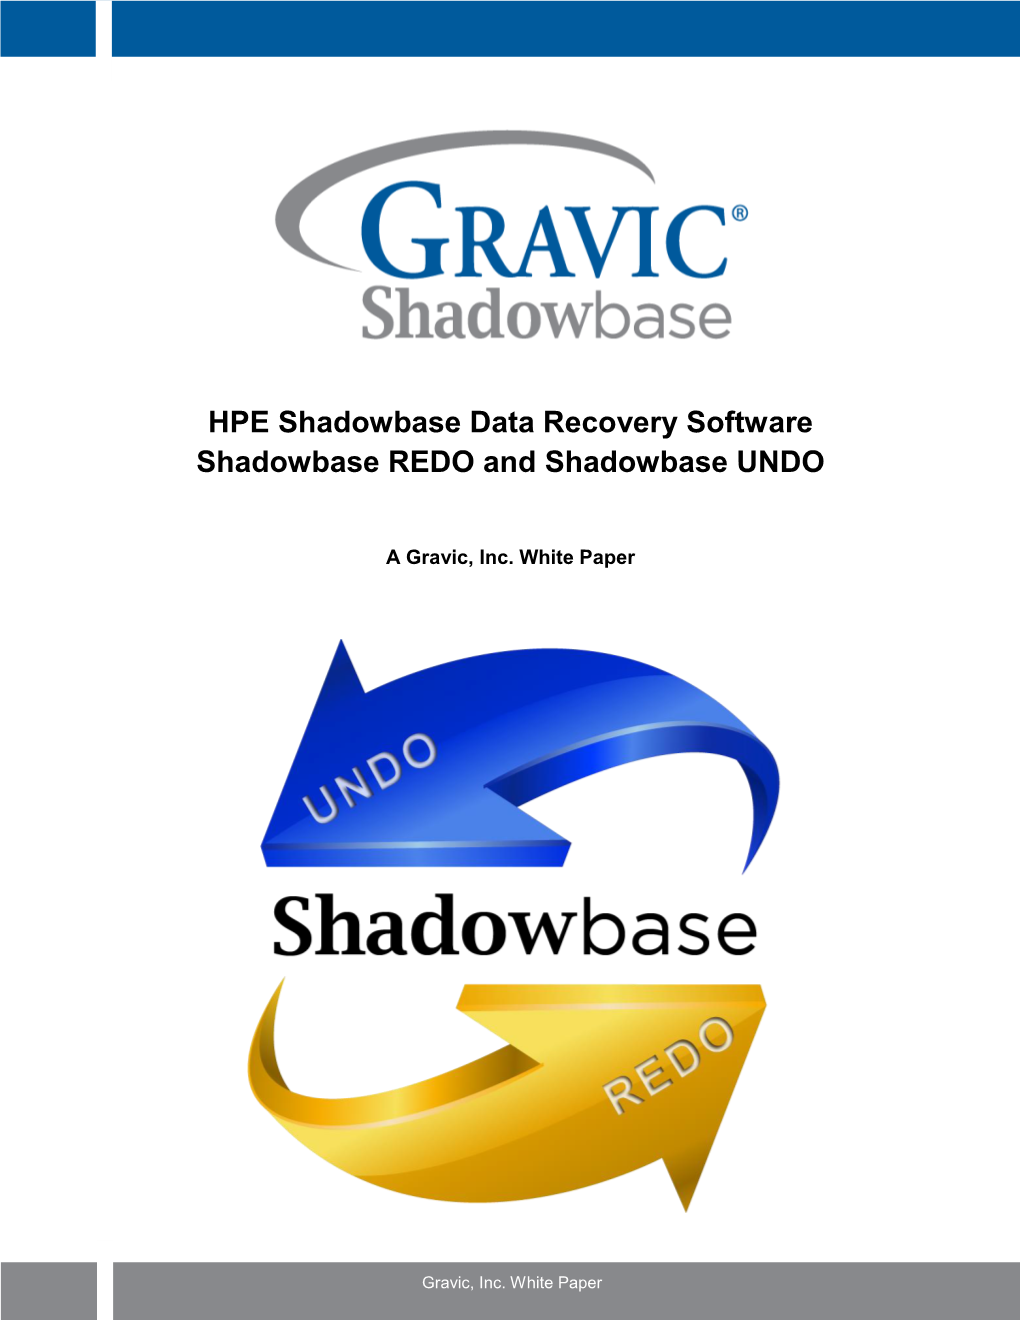 HPE Shadowbase Data Recovery Software Shadowbase REDO and Shadowbase UNDO